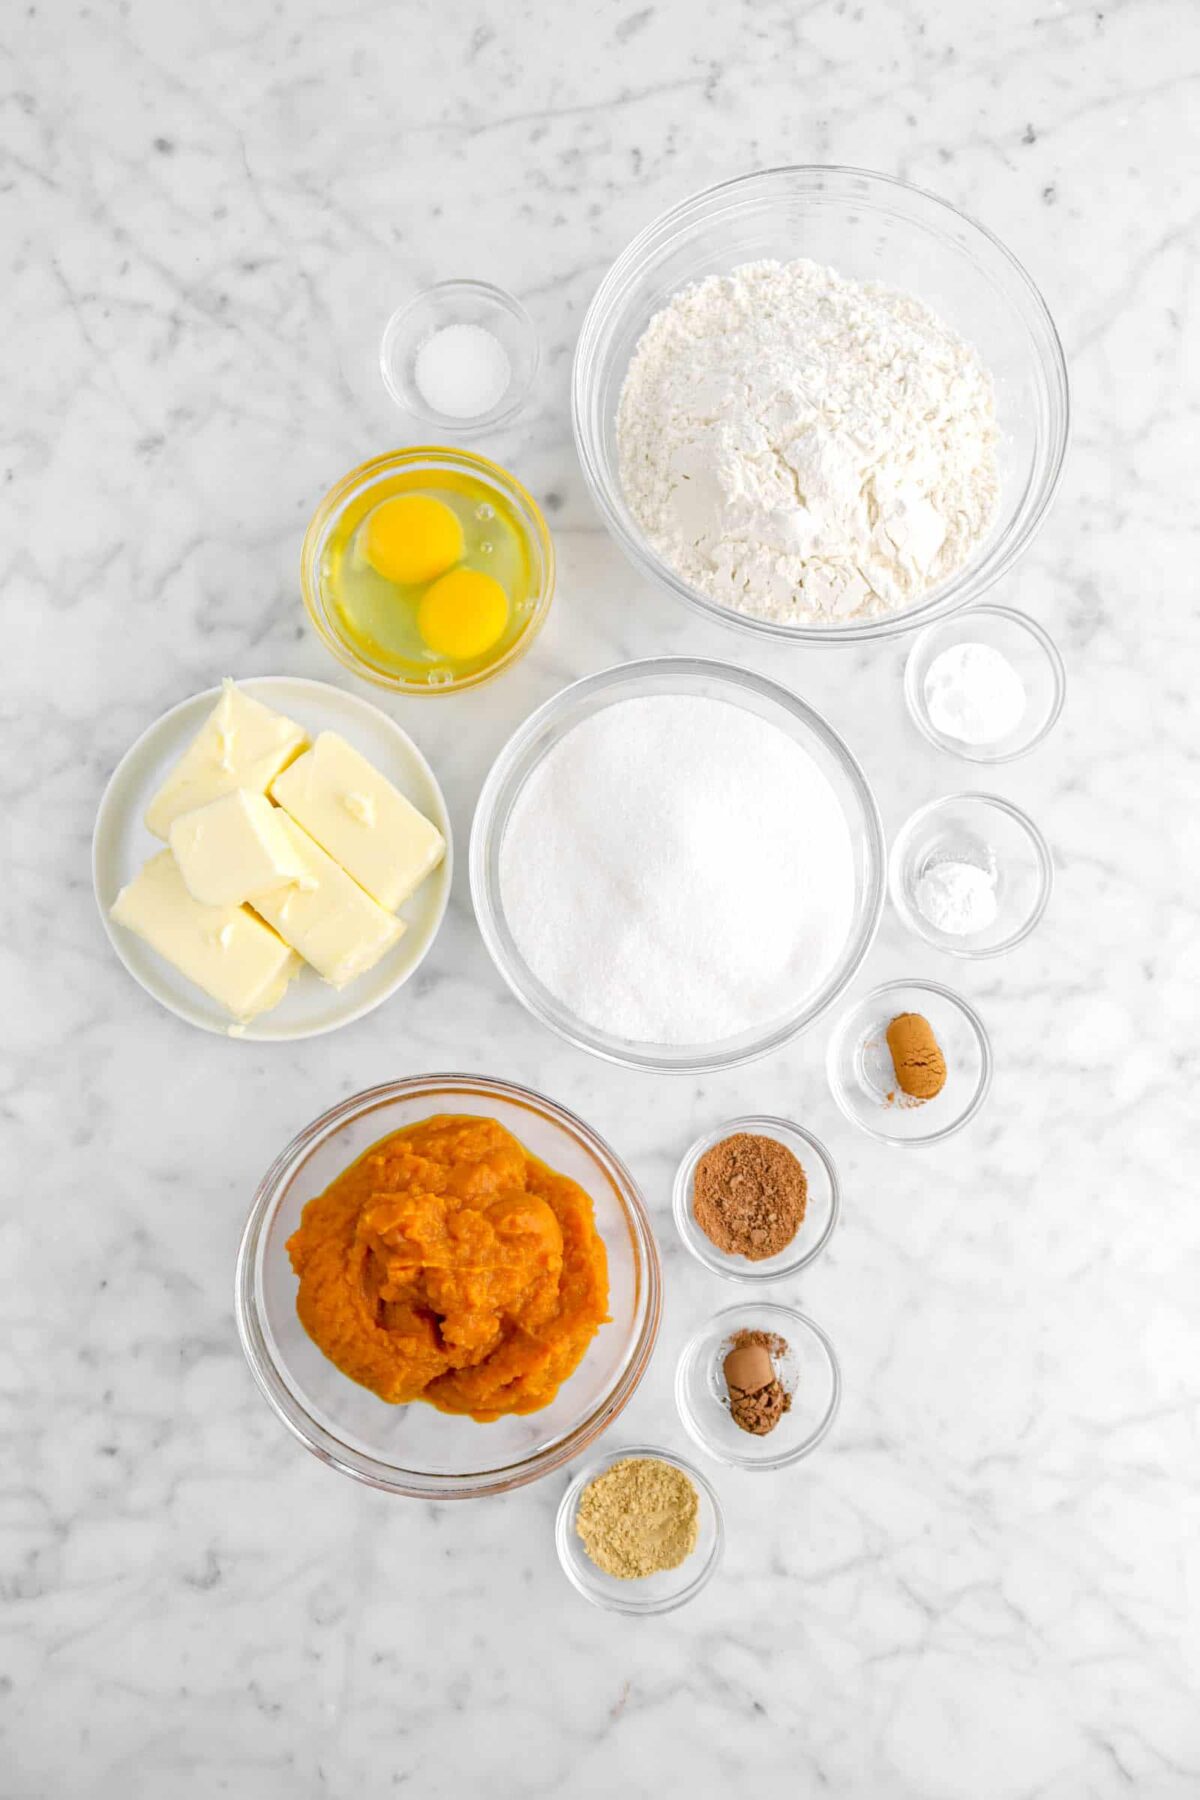 salt, flour, eggs, butter, sugar, baking soda, baking powder, cinnamon, nutmeg, cloves, ginger, and pumpkin puree on marble counter